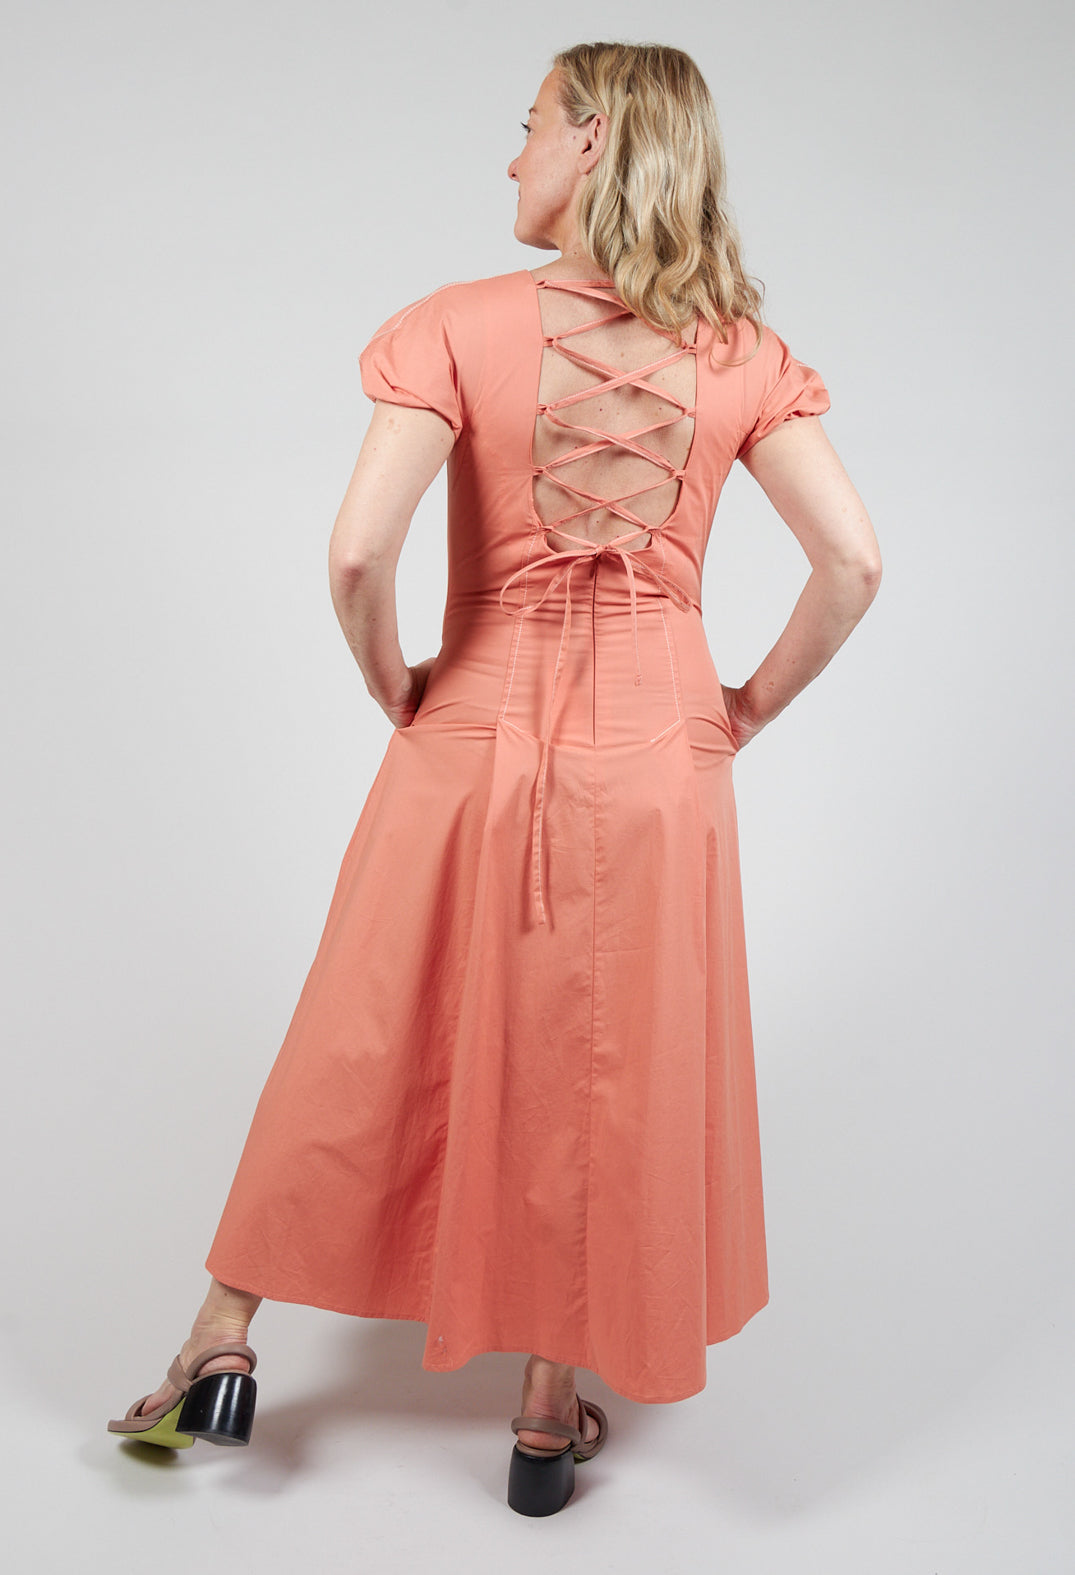 corset back detail on a-line dress in antique rose